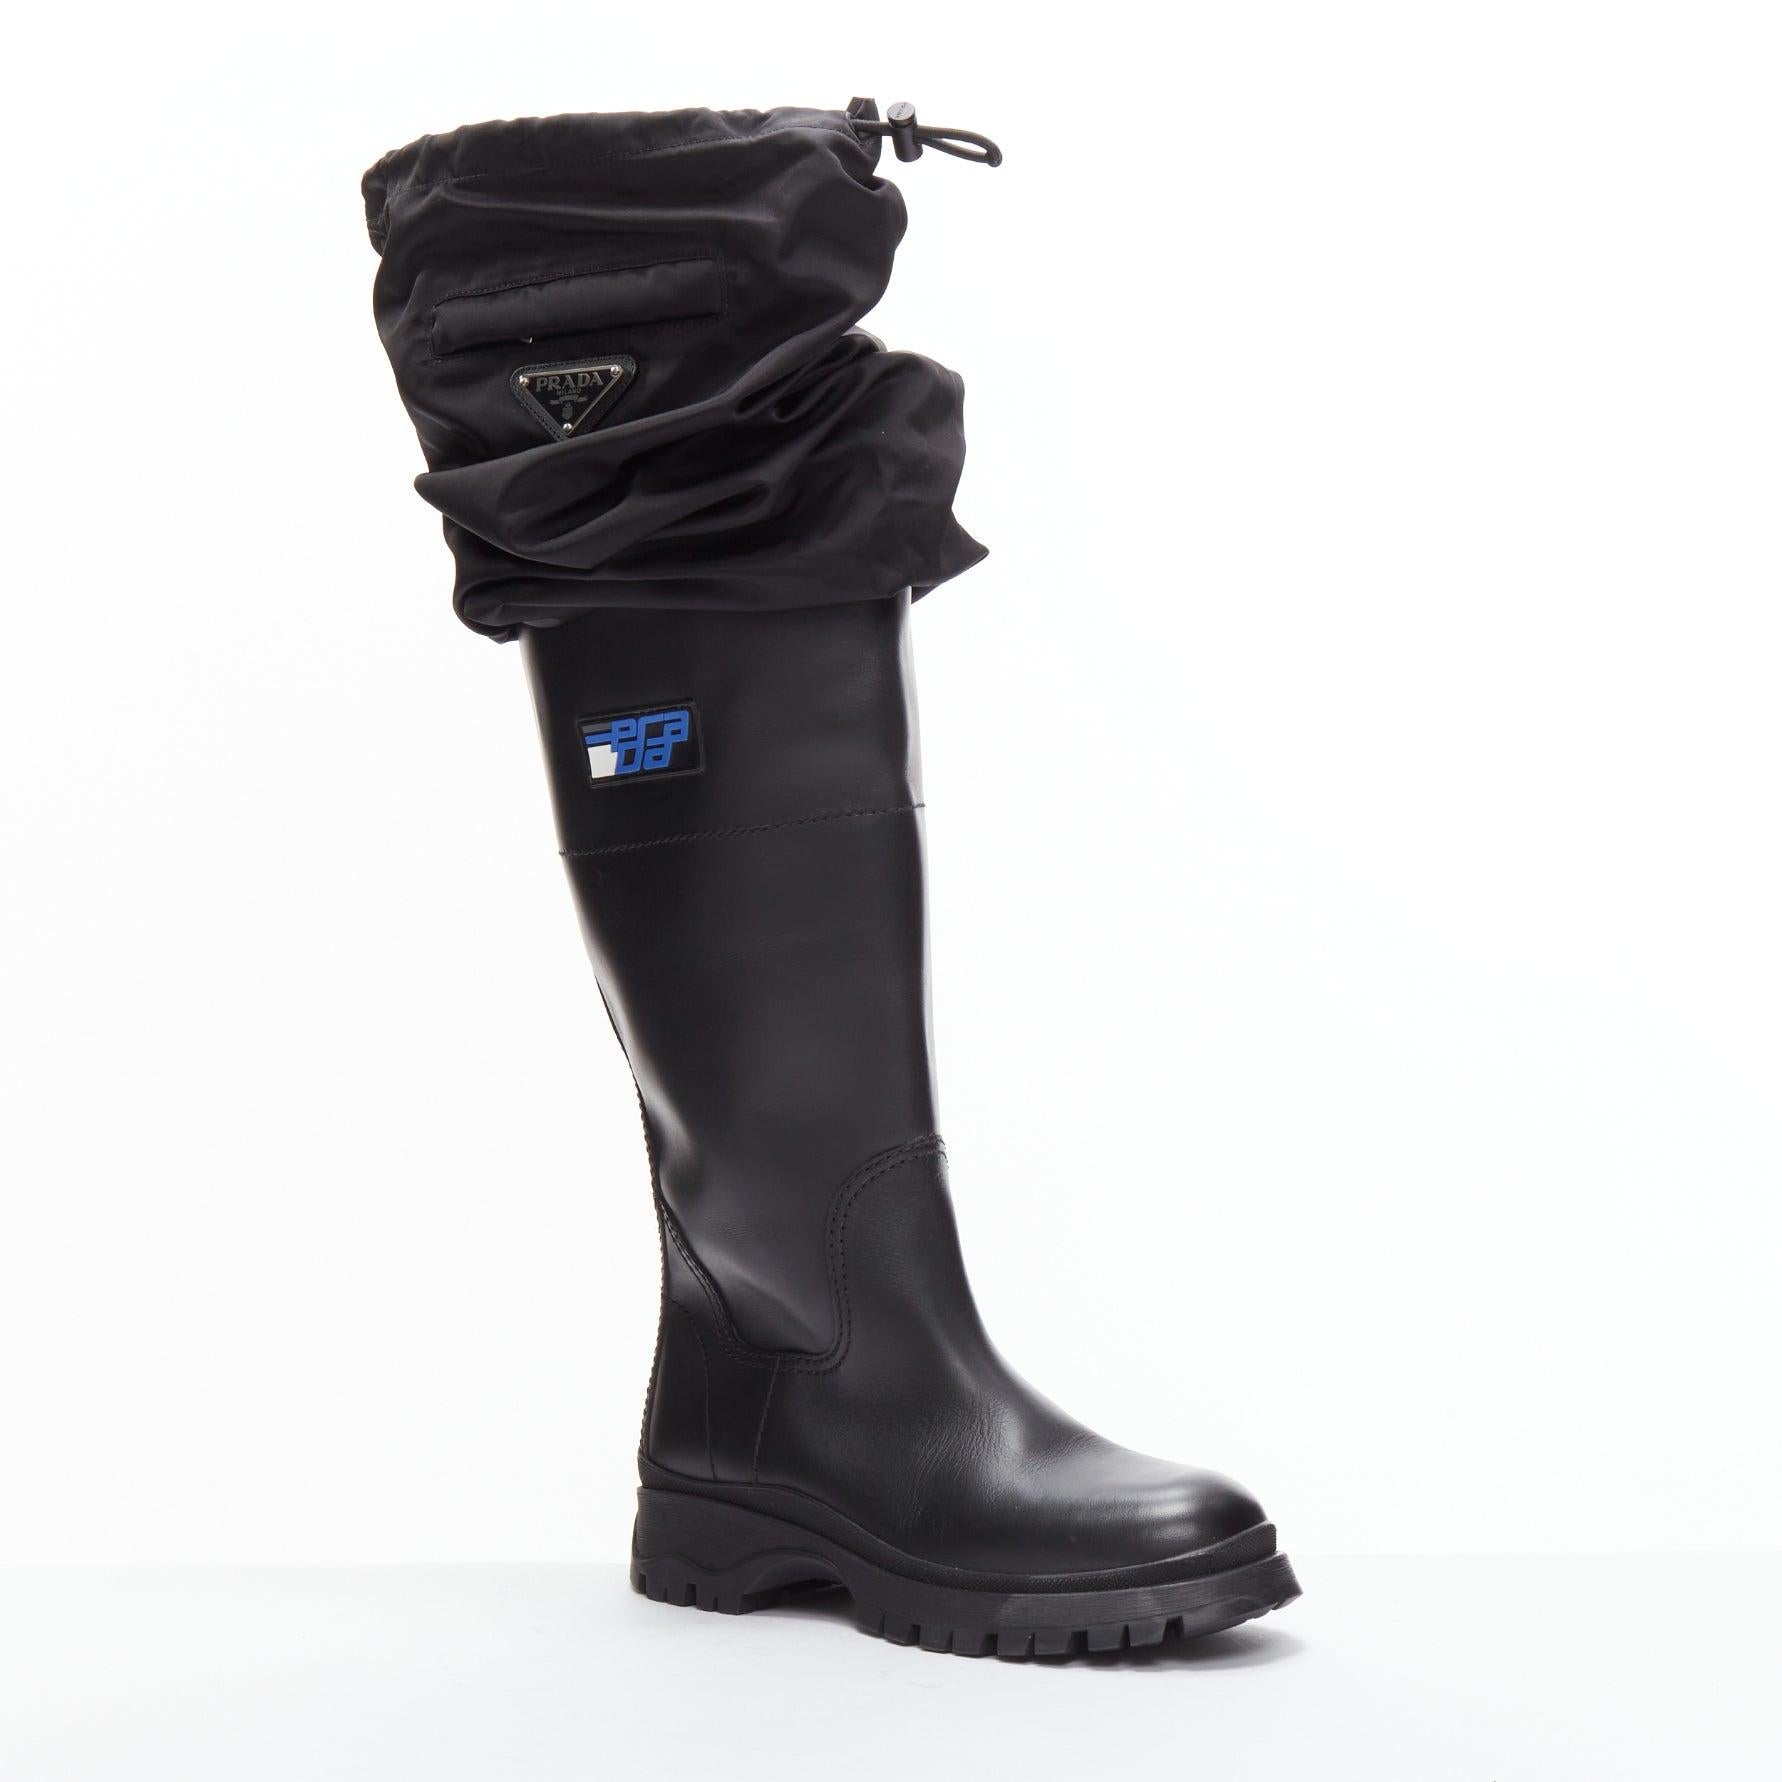 rare PRADA 2009 Runway Gaiter black leather nylon thigh high boots EU38
Reference: TGAS/D00657
Brand: Prada
Designer: Miuccia Prada
Collection: FW 2009 - Runway
Material: Leather, Fabric
Color: Black, Blue
Pattern: Solid
Closure: Slip On
Lining: